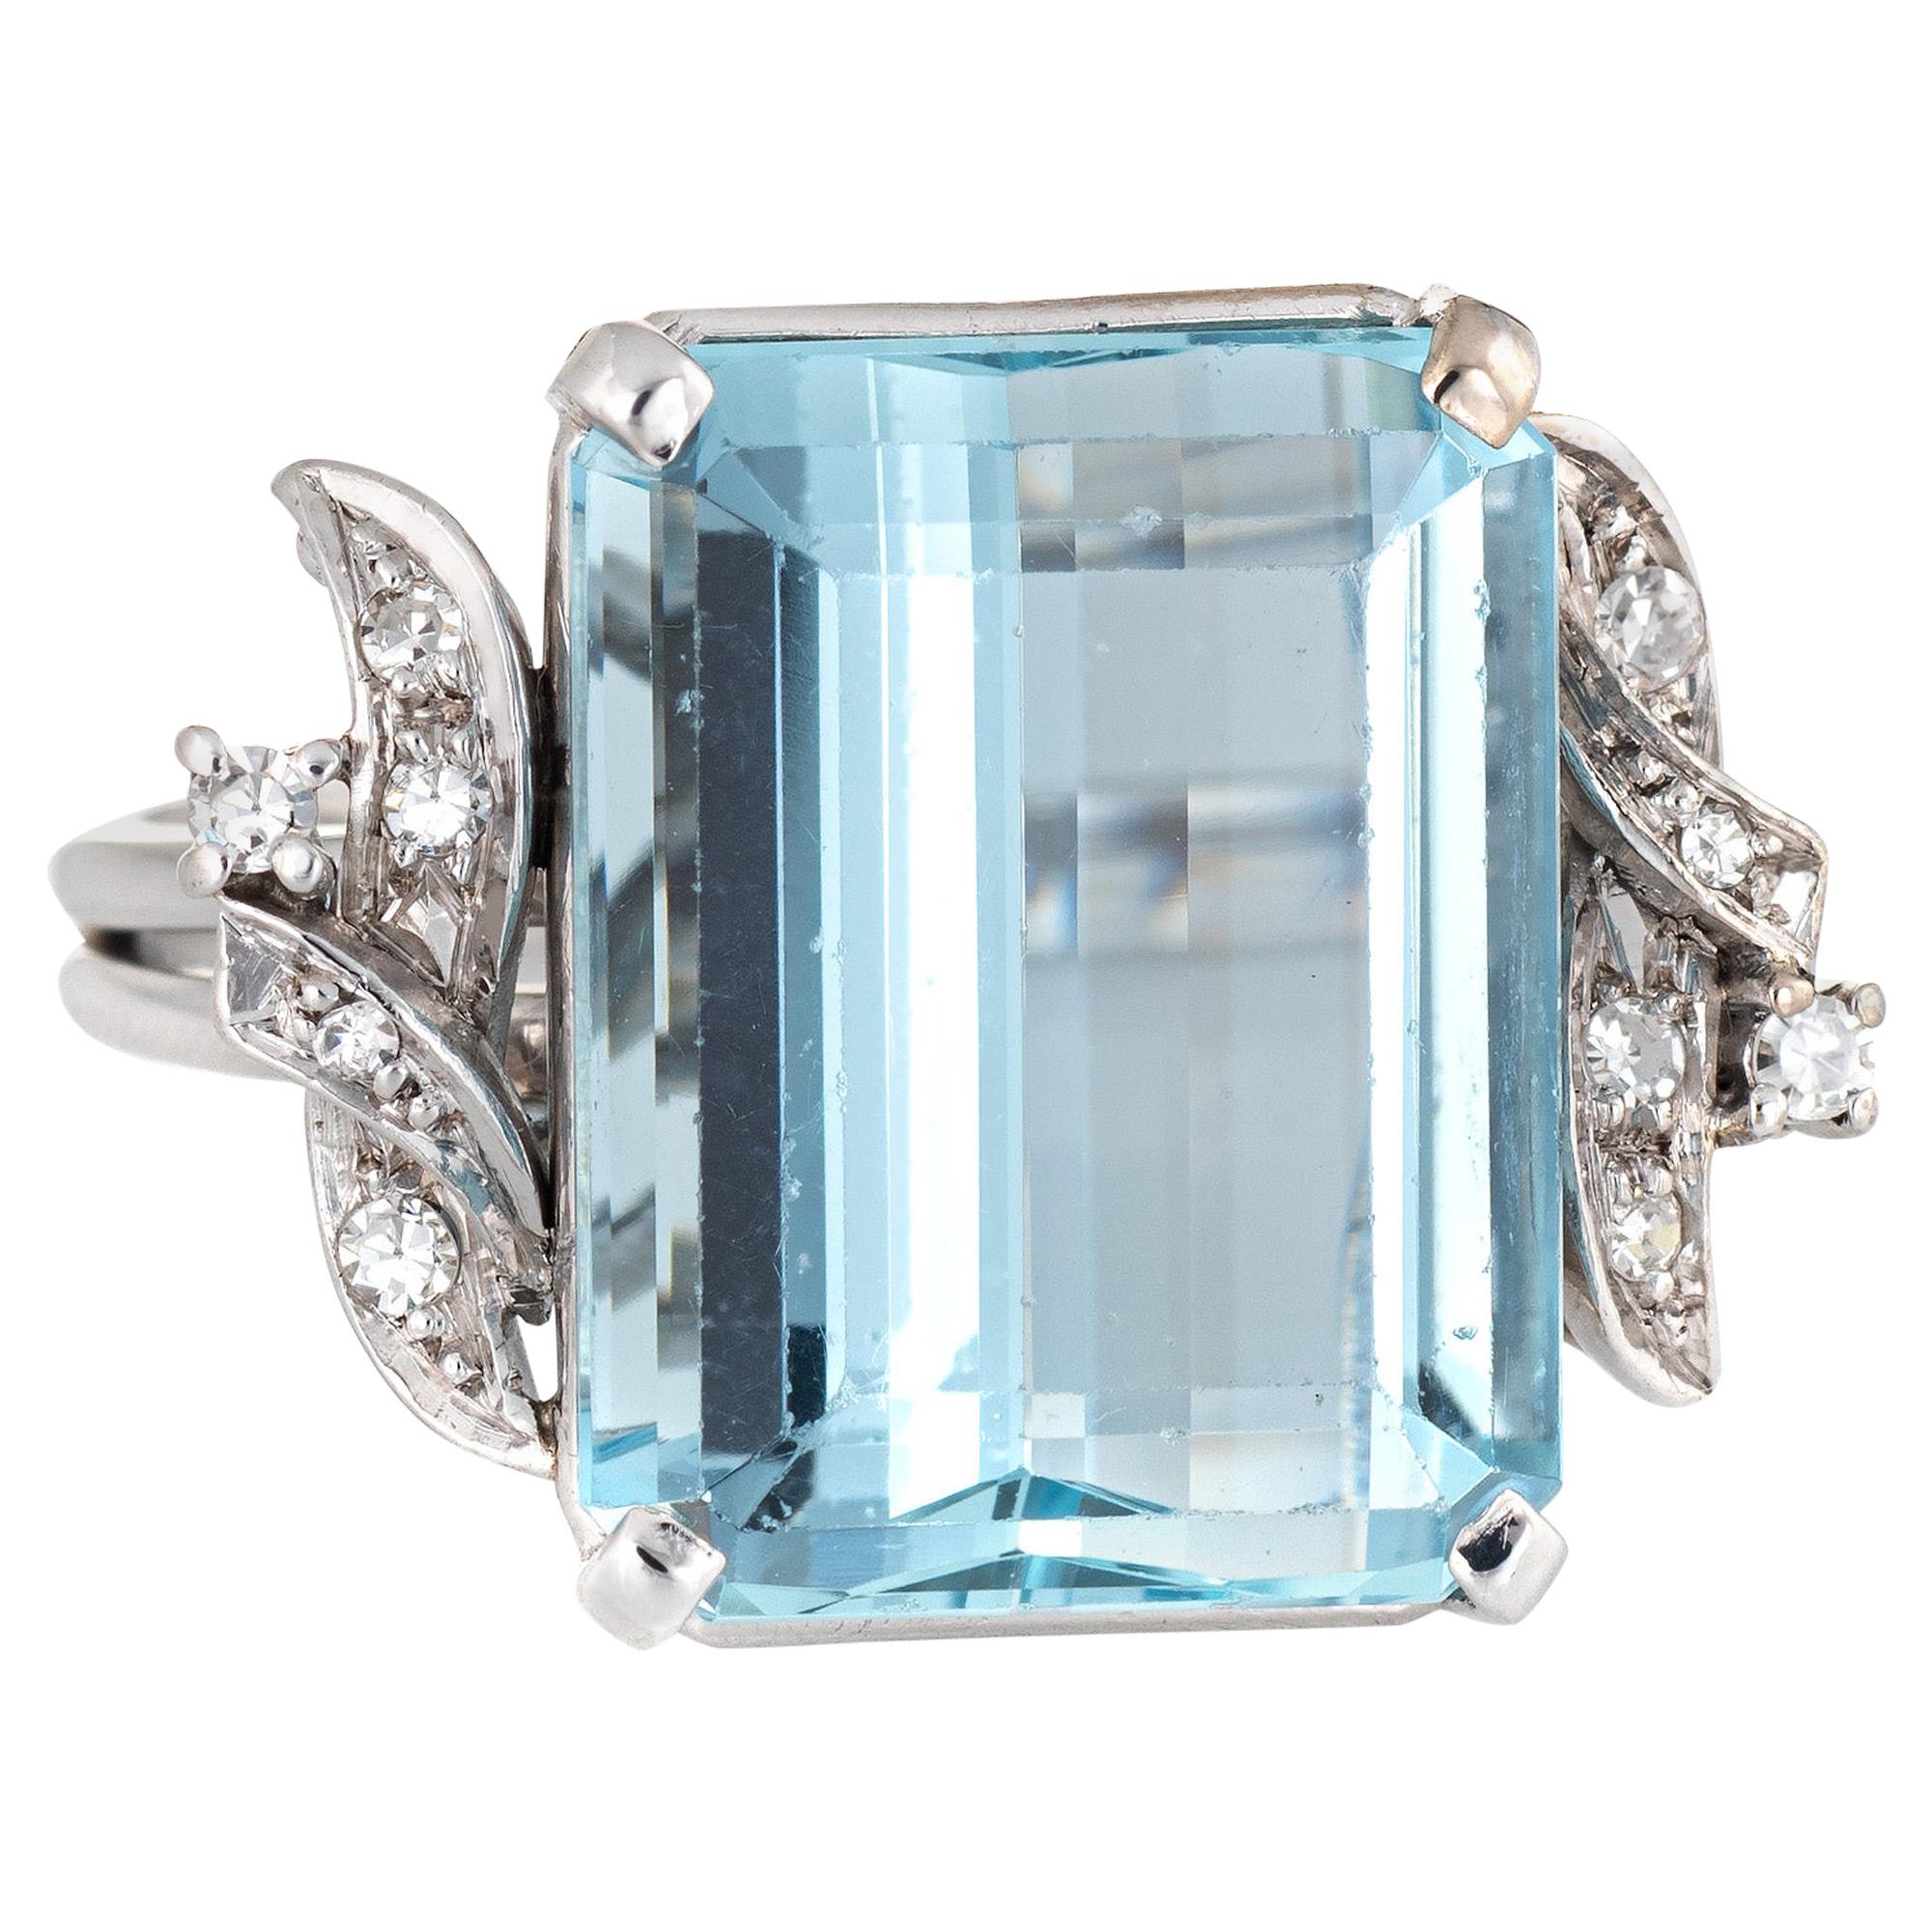 12 Carat Aquamarine Diamond Ring Vintage 18k White Gold Fine Cocktail Jewelry